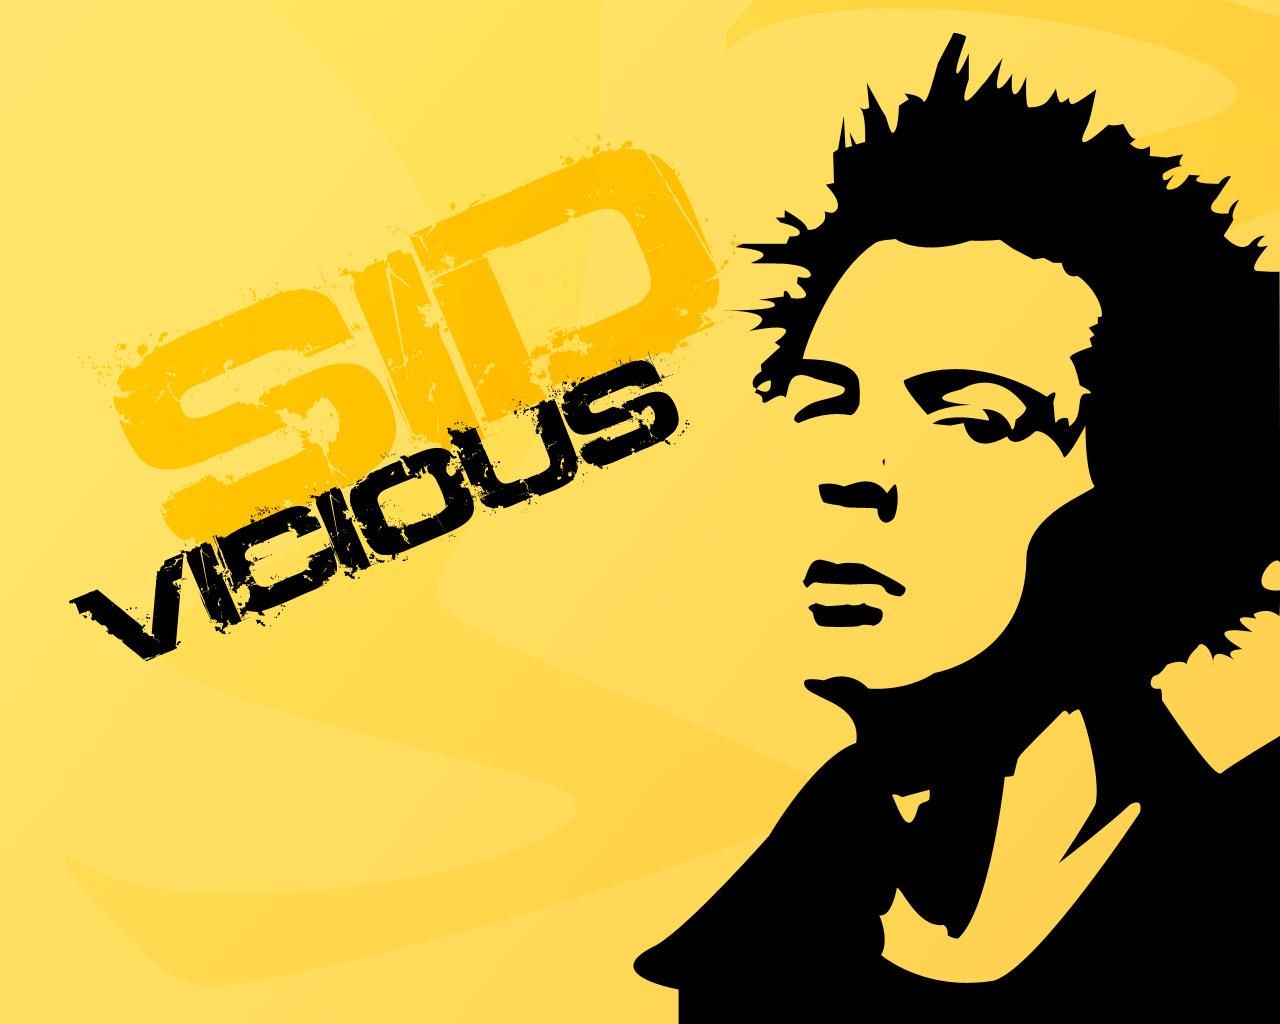 Sid Vicious By Danny Boy On Deviantart HD Wallpapers Range